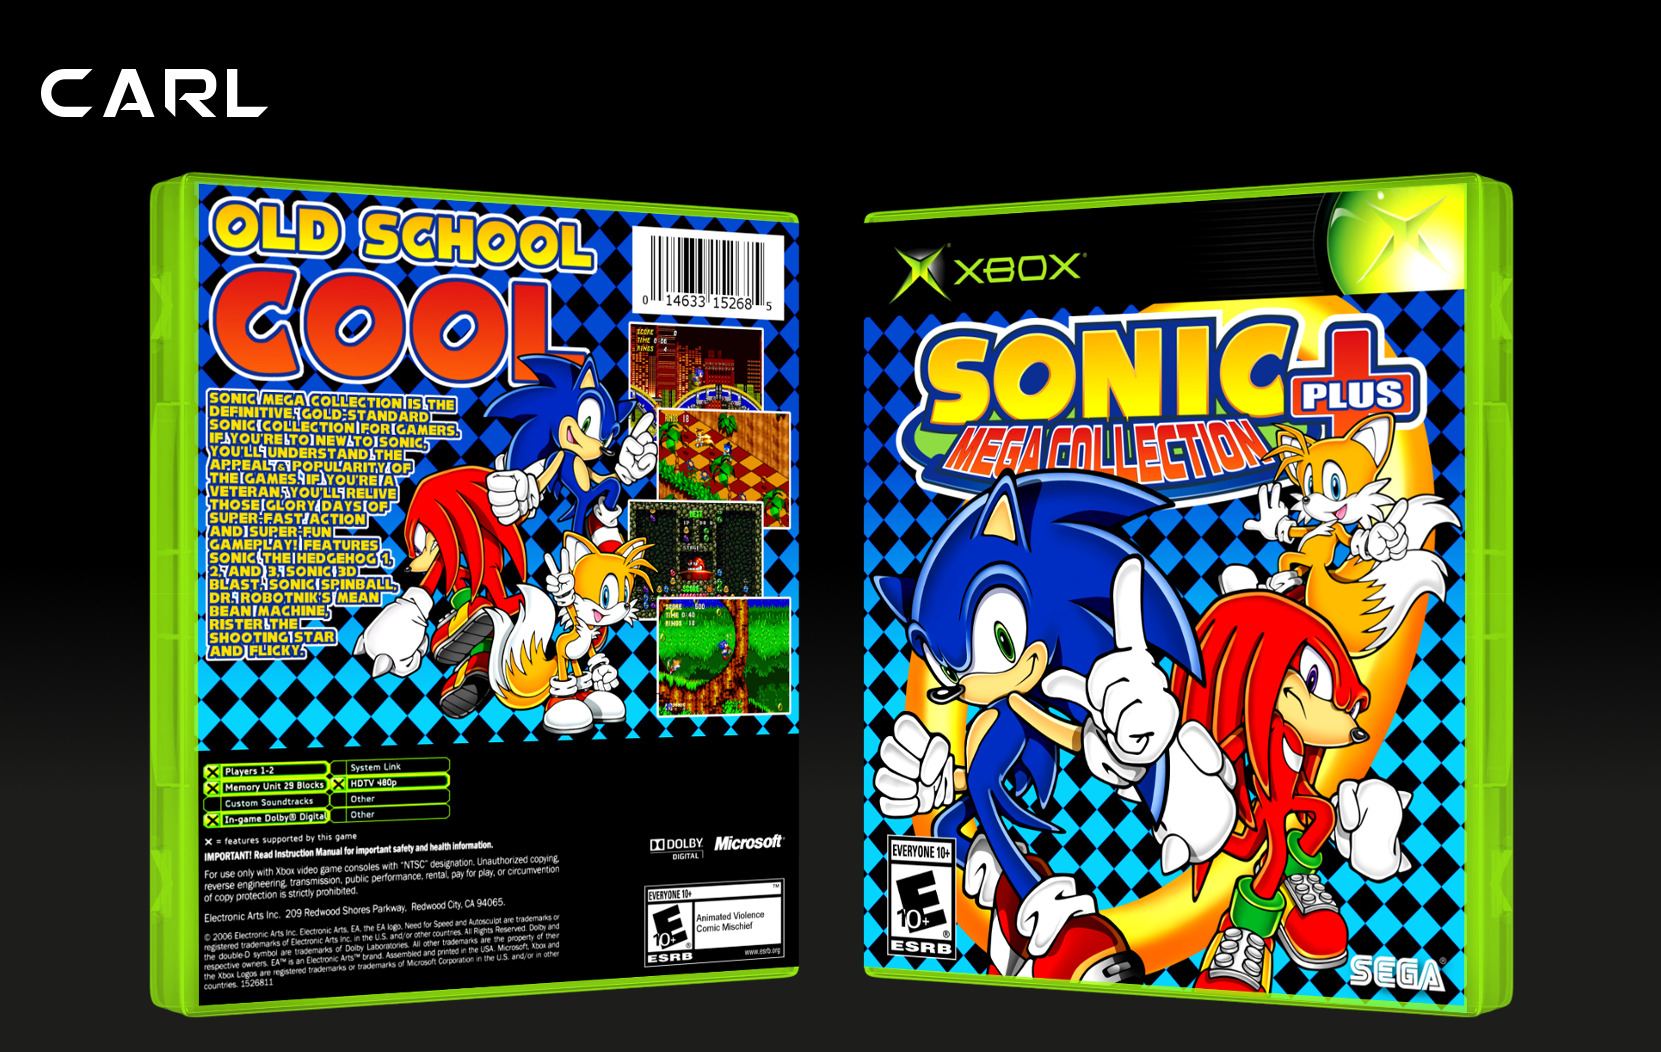 Sonic Mega Collection Plus box cover